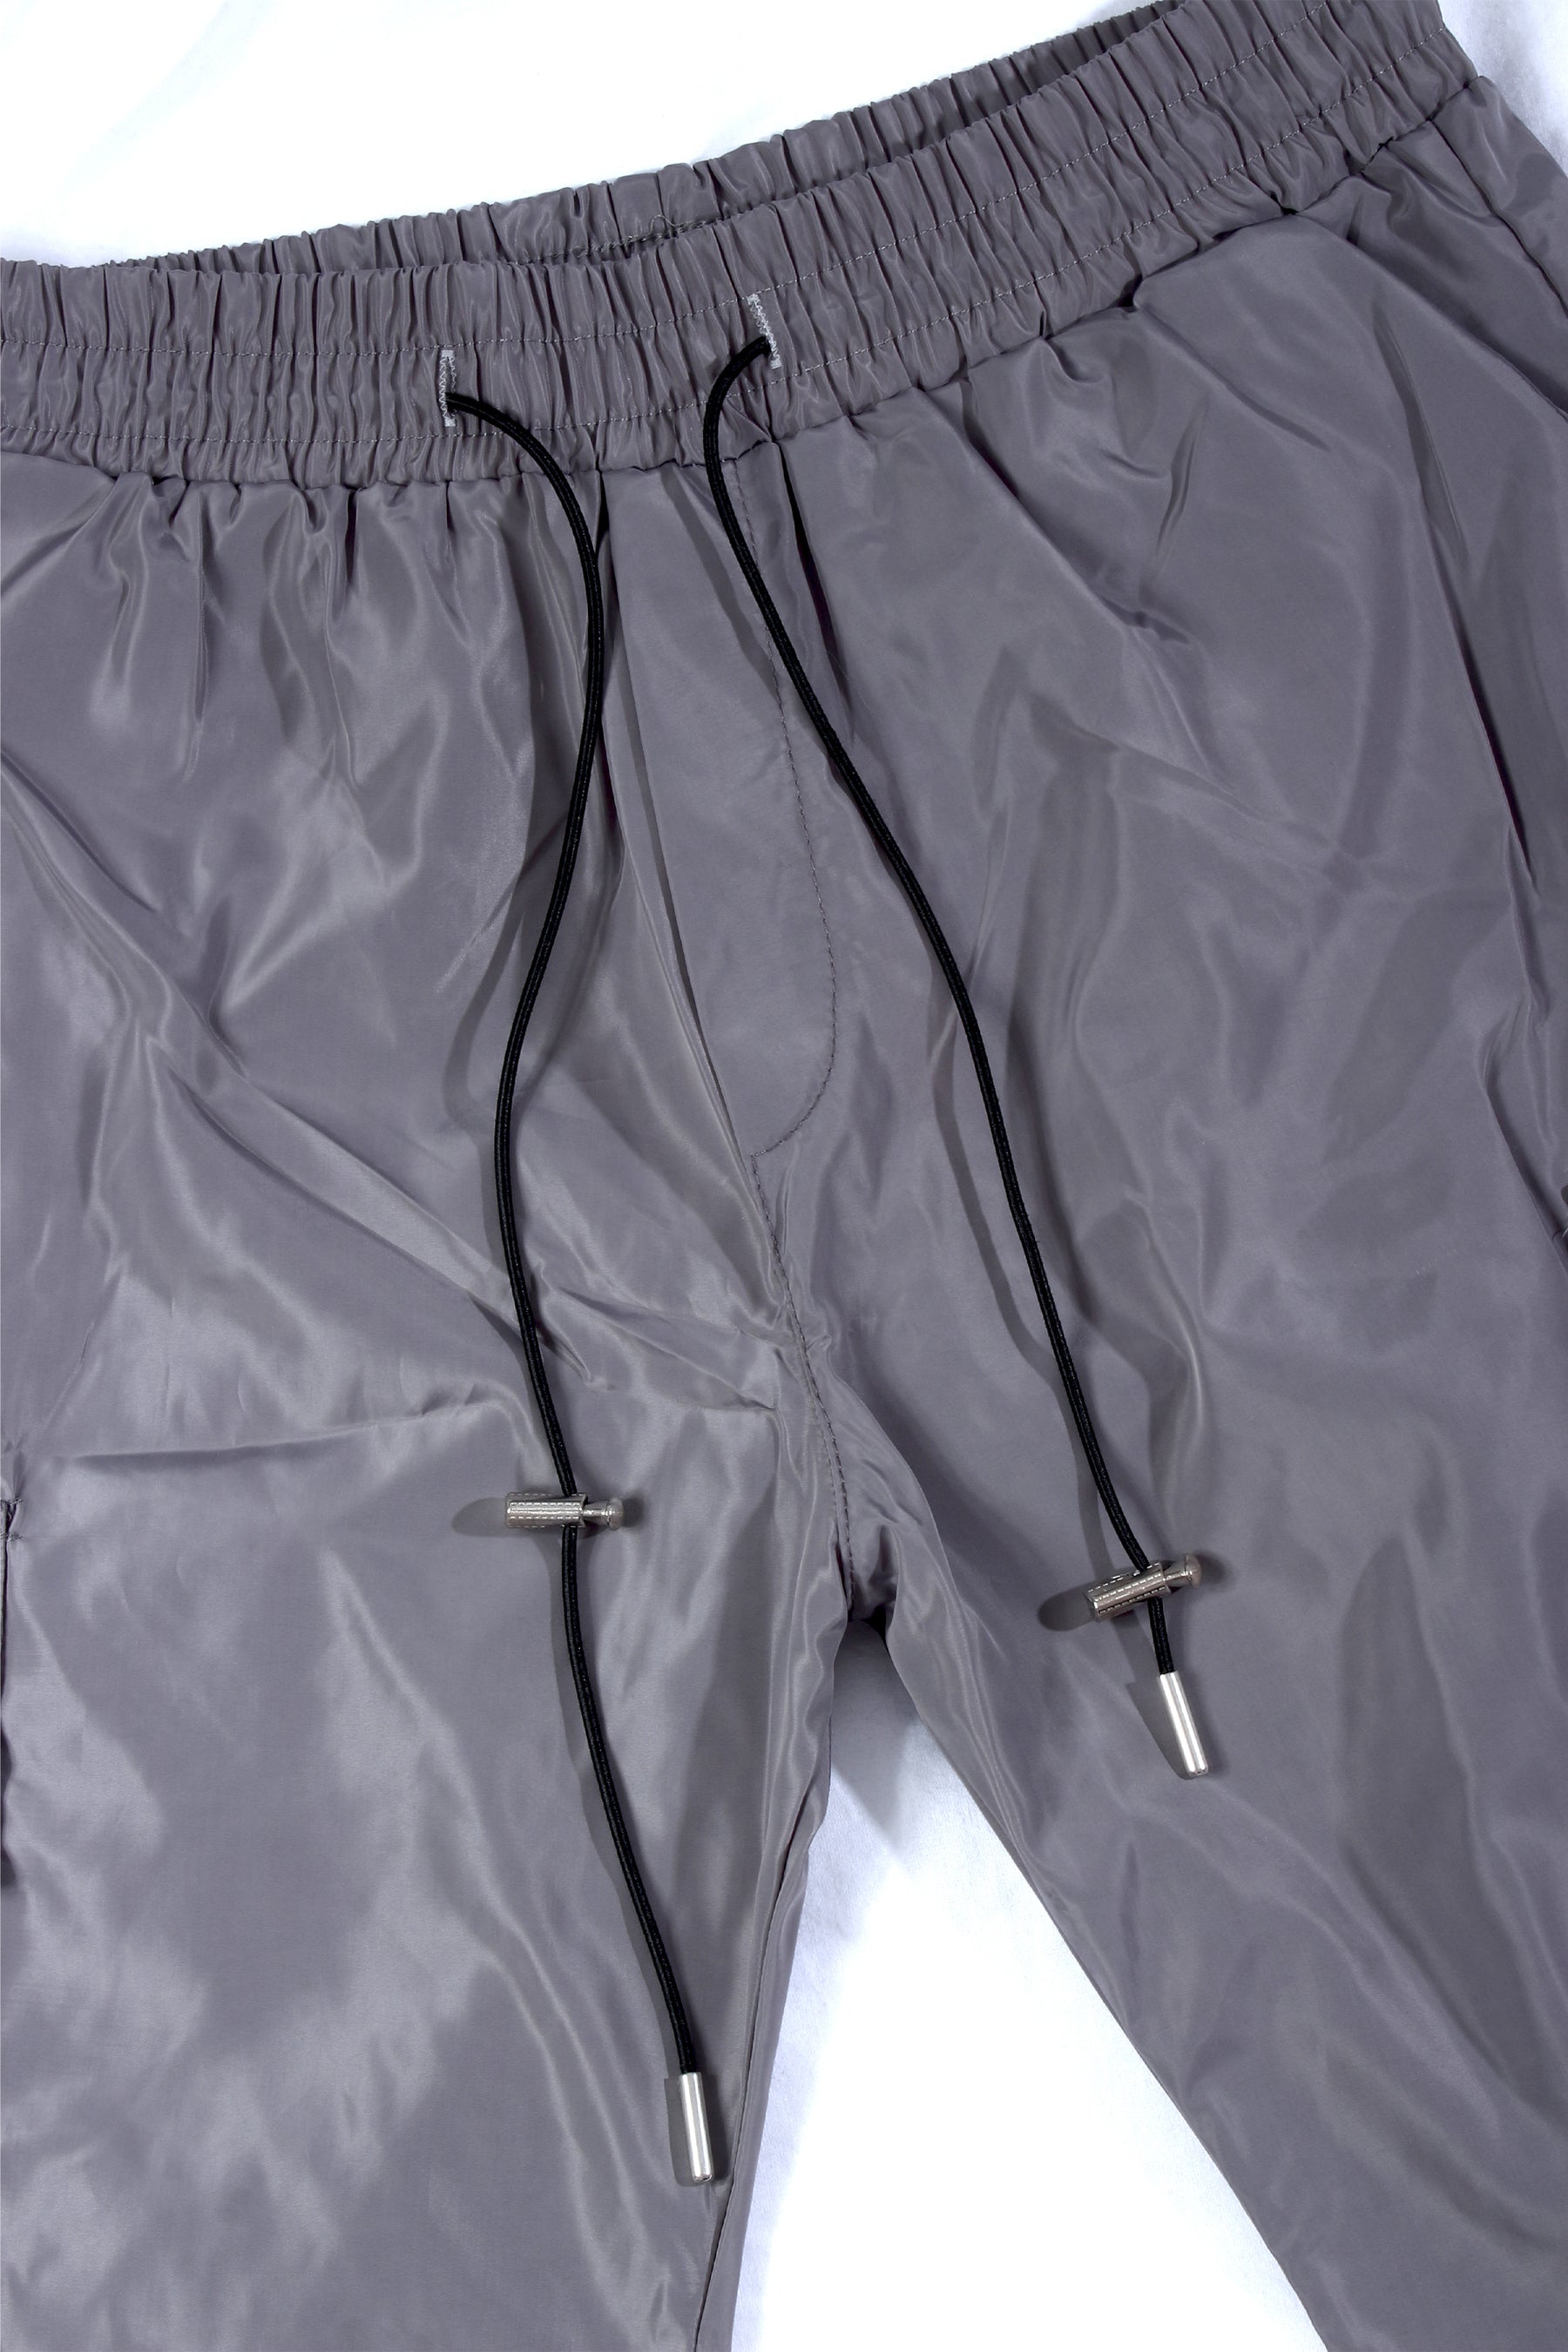 CREW Short Shine Cargo 2 Pockets Pants Grey